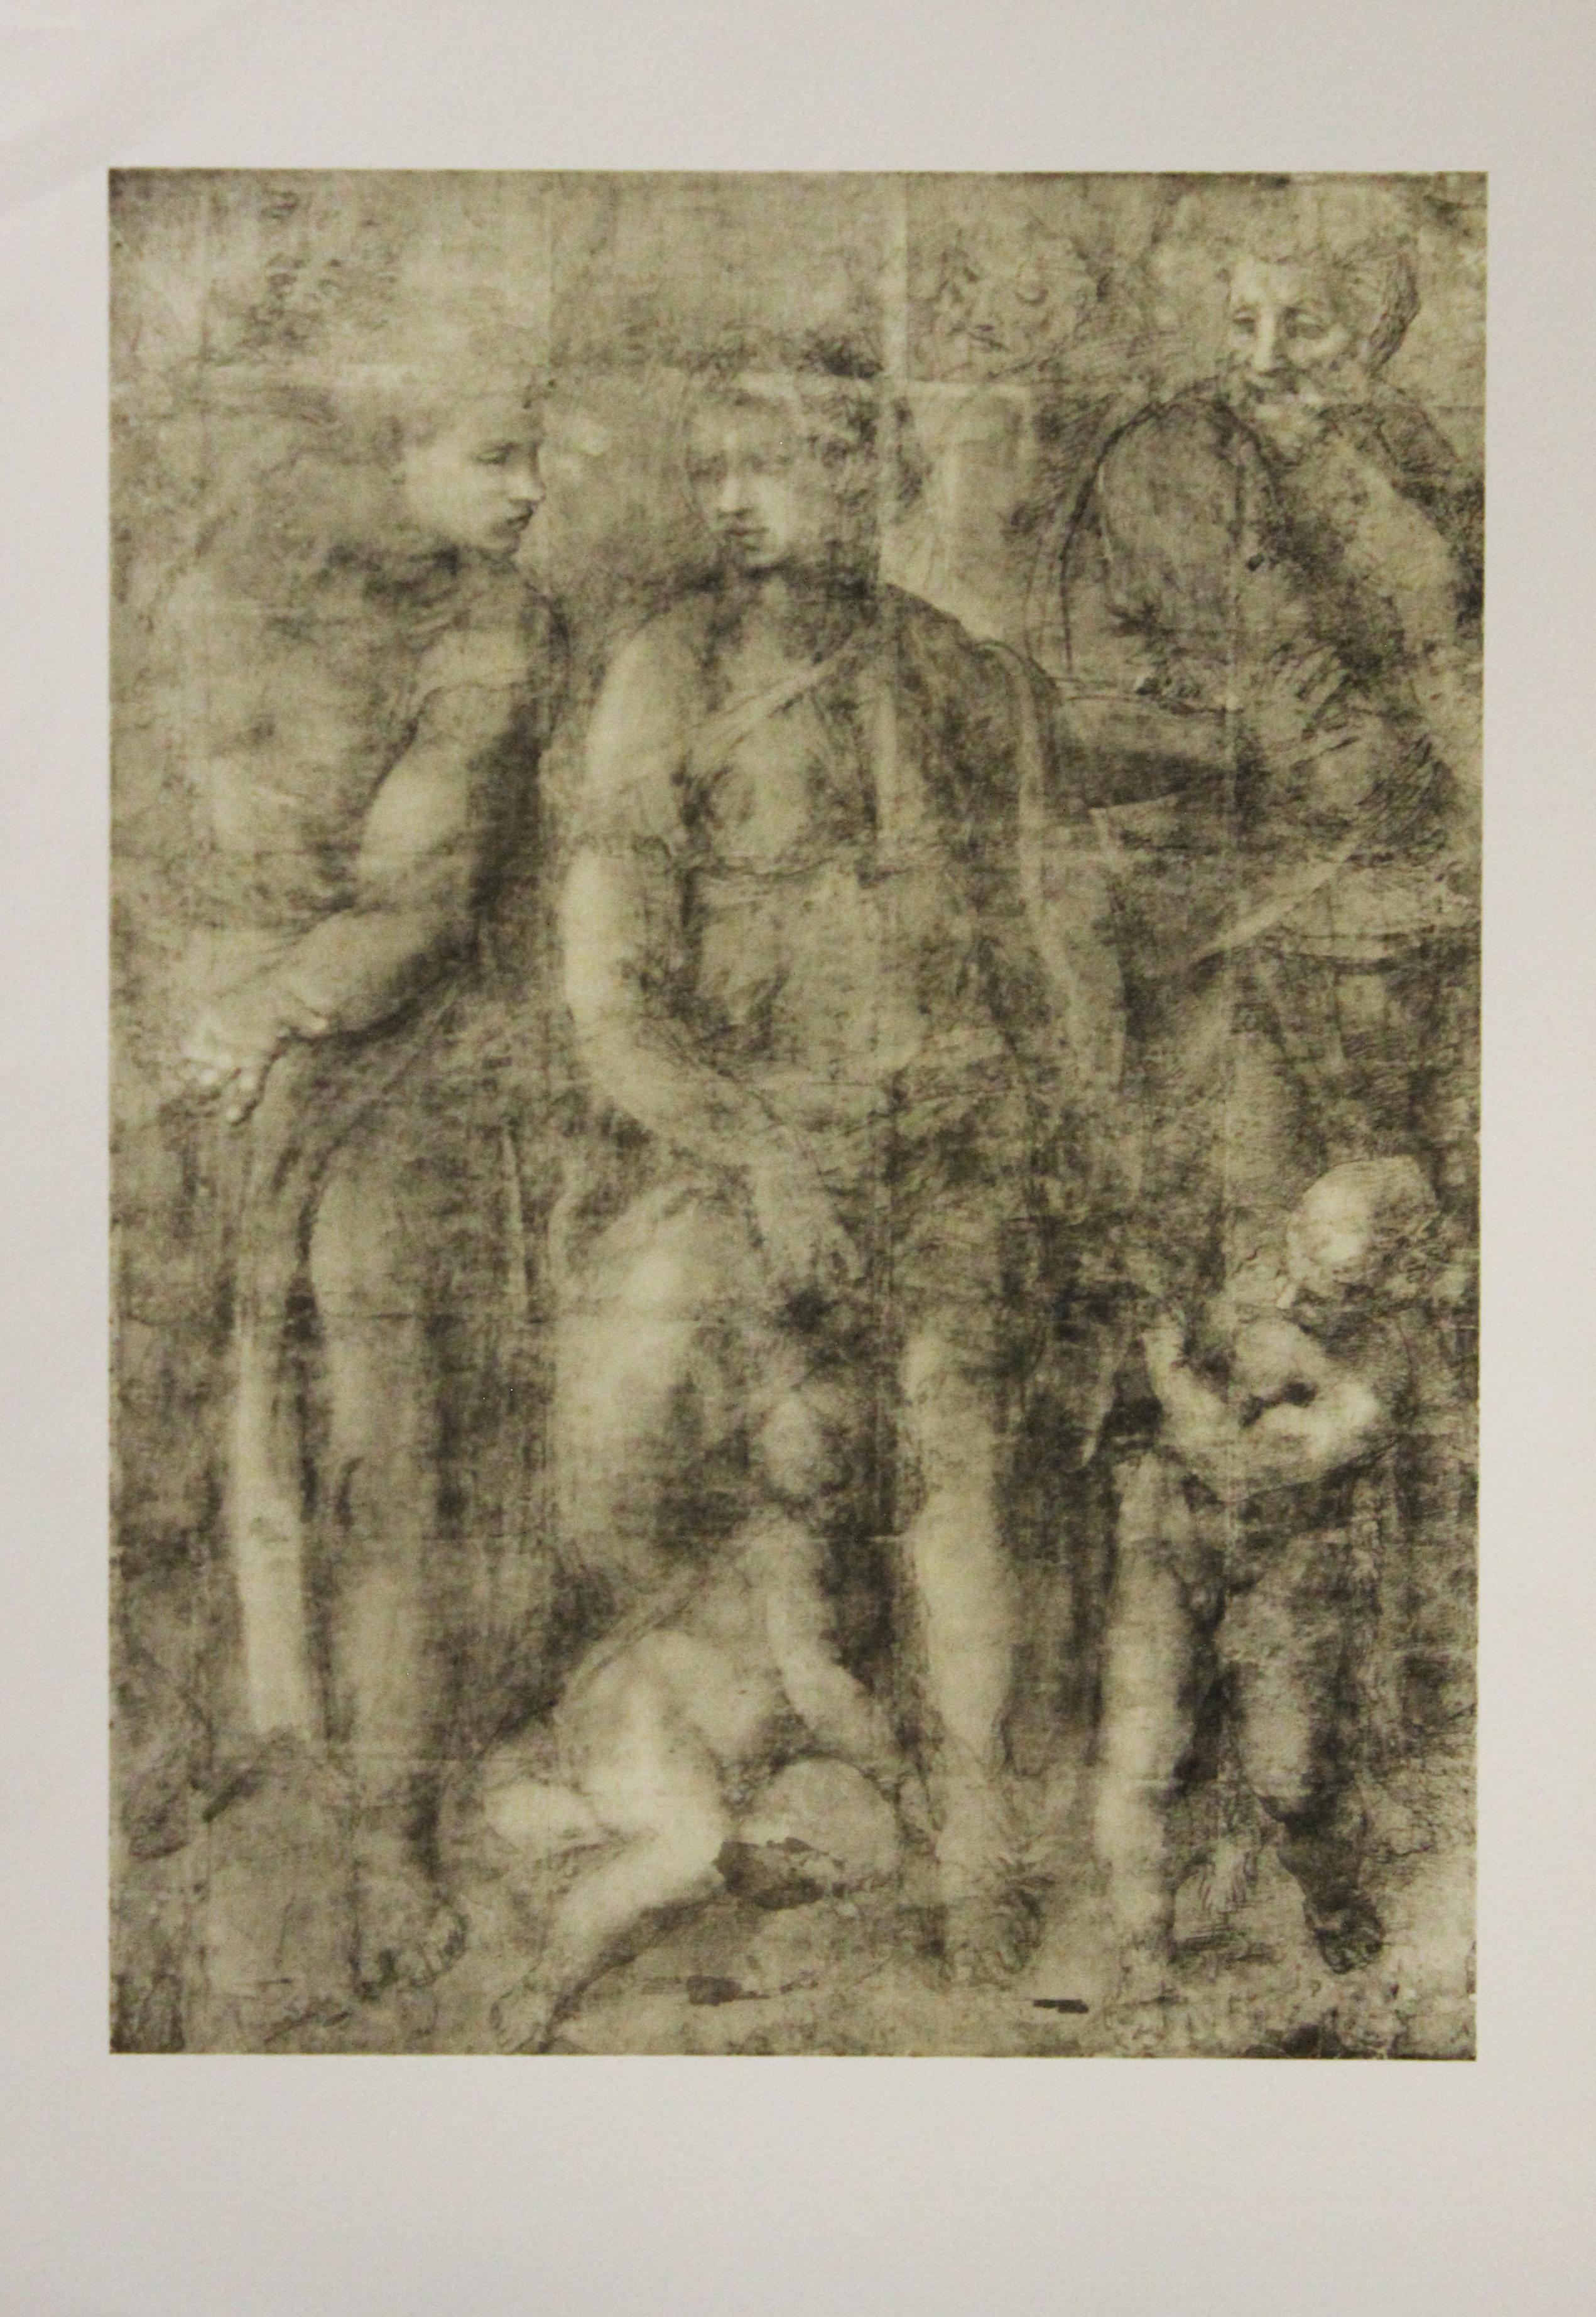 Michelangelo Buonarroti Portrait Print - Epiphany-Poster. New York Graphic Society. Printed in Italy. 